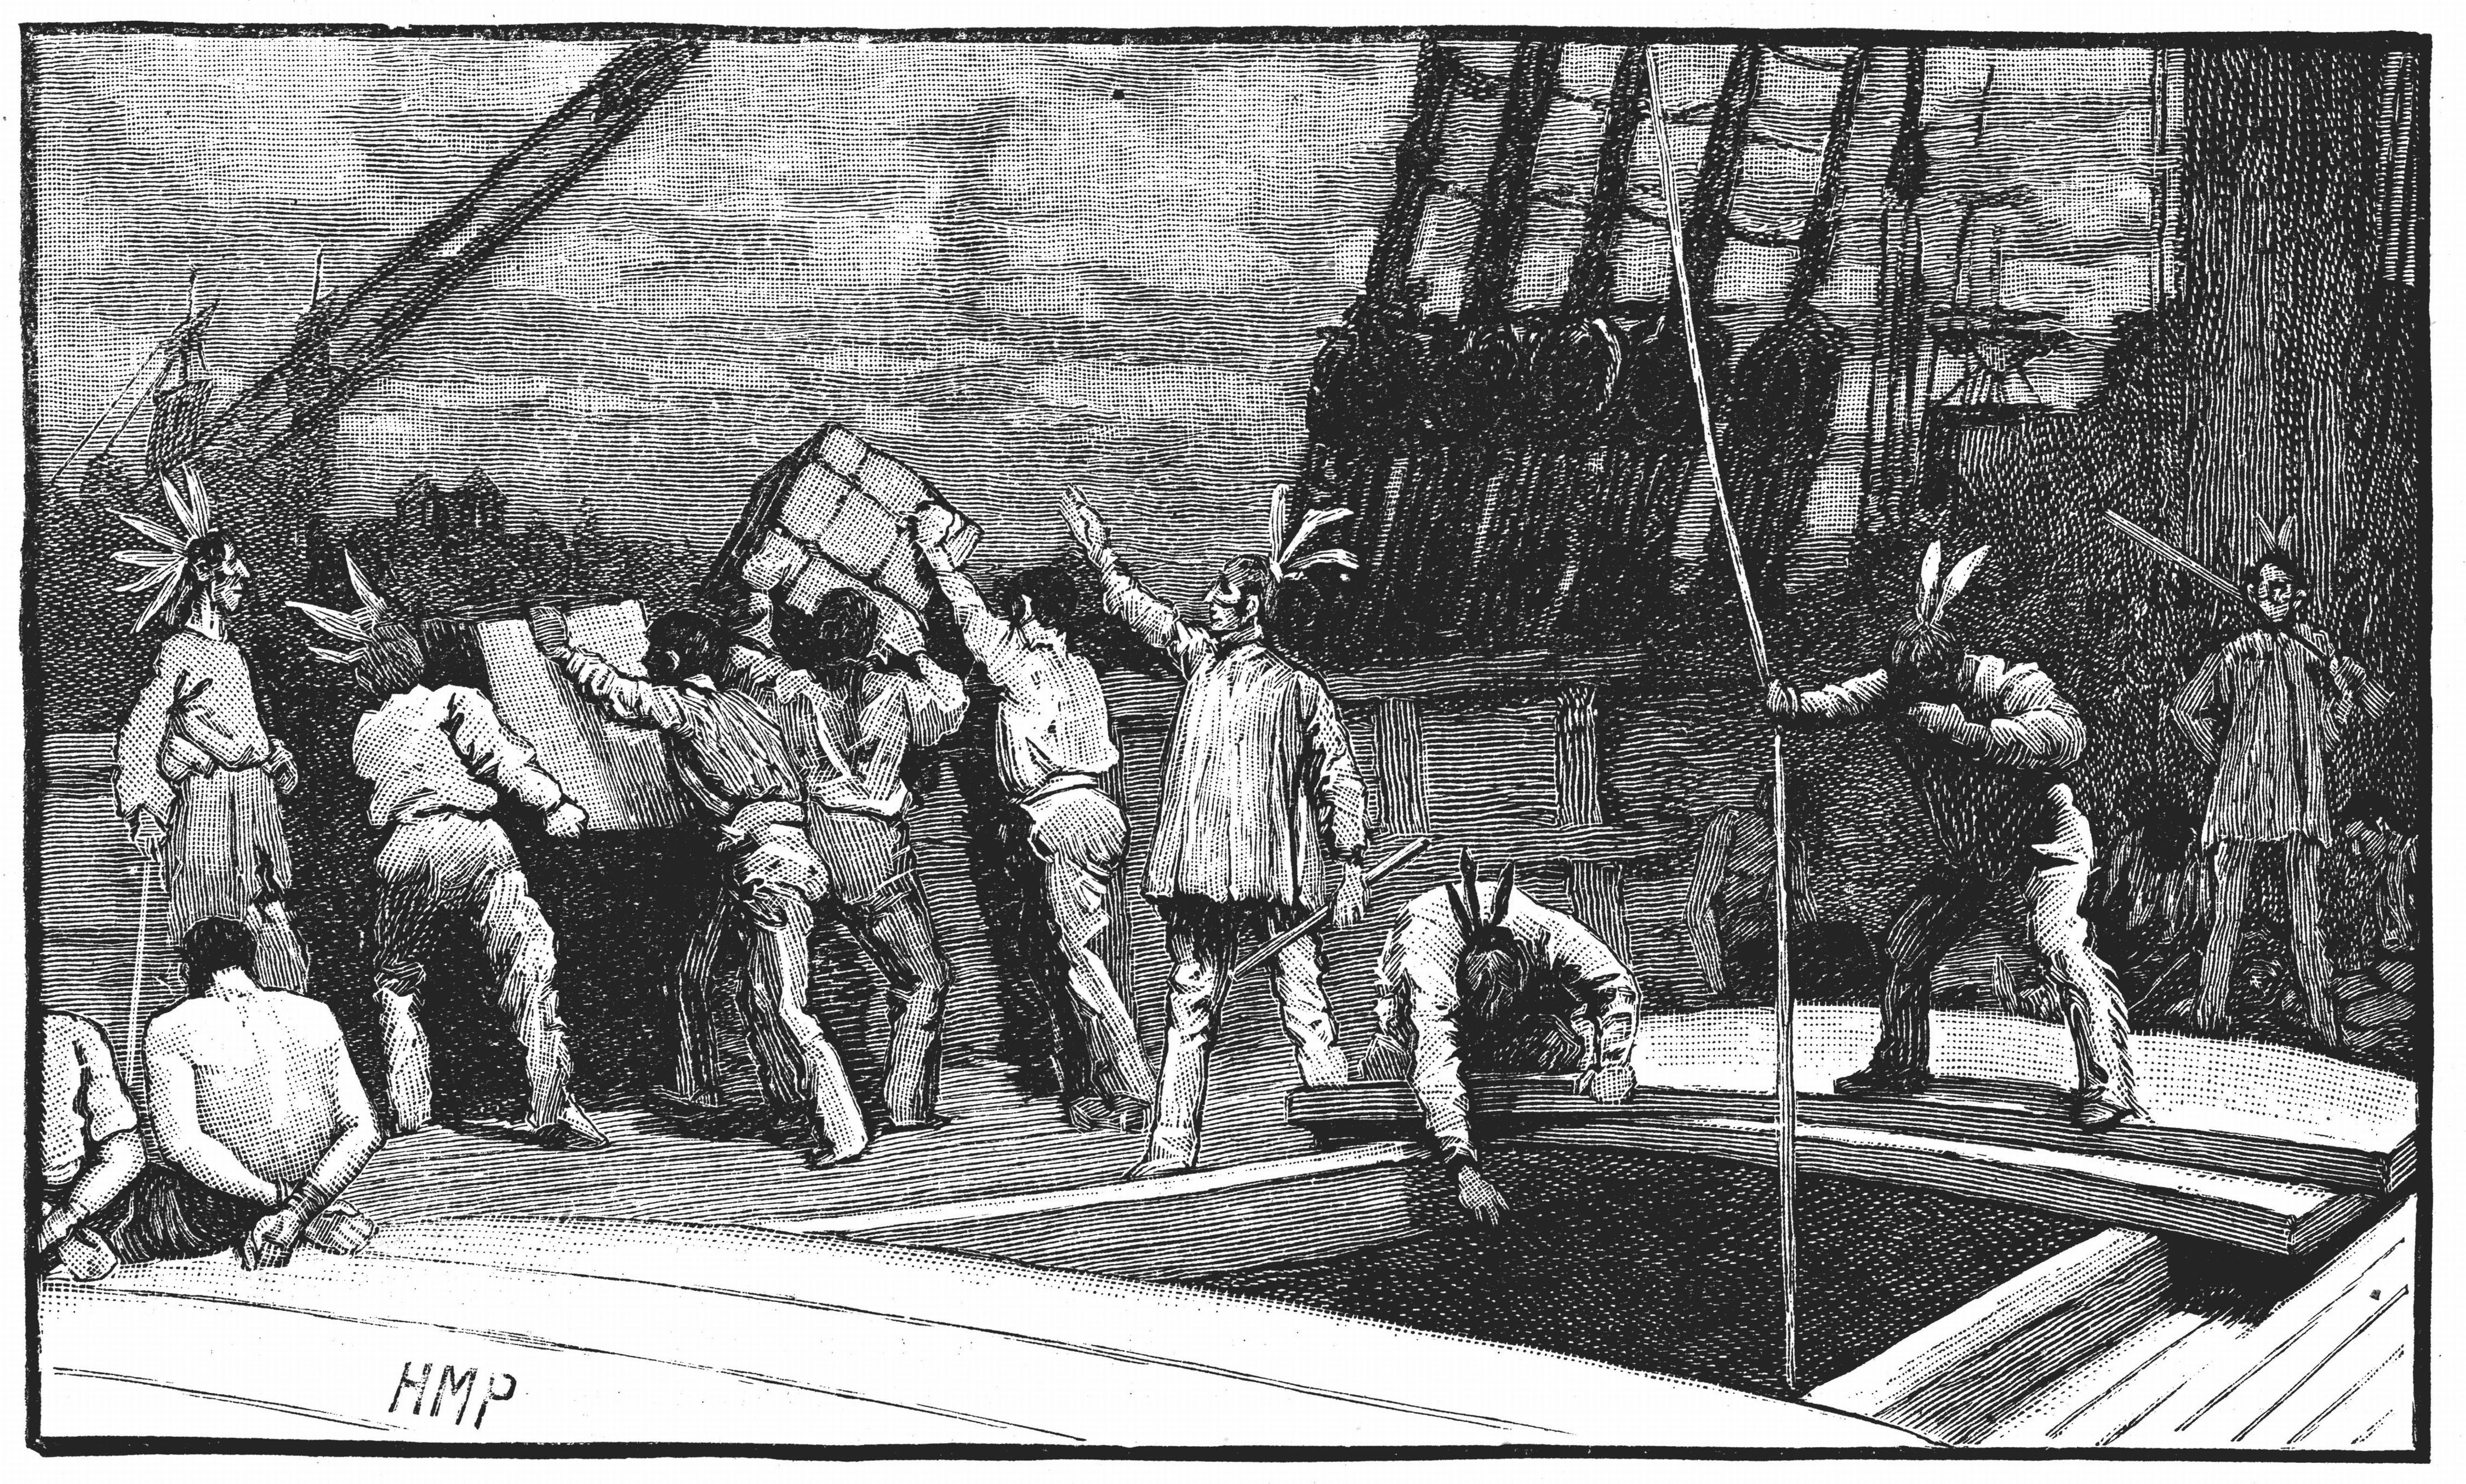 On this day in history, December 16, 1773, brazen Boston Tea Party protest escalates American rebellion